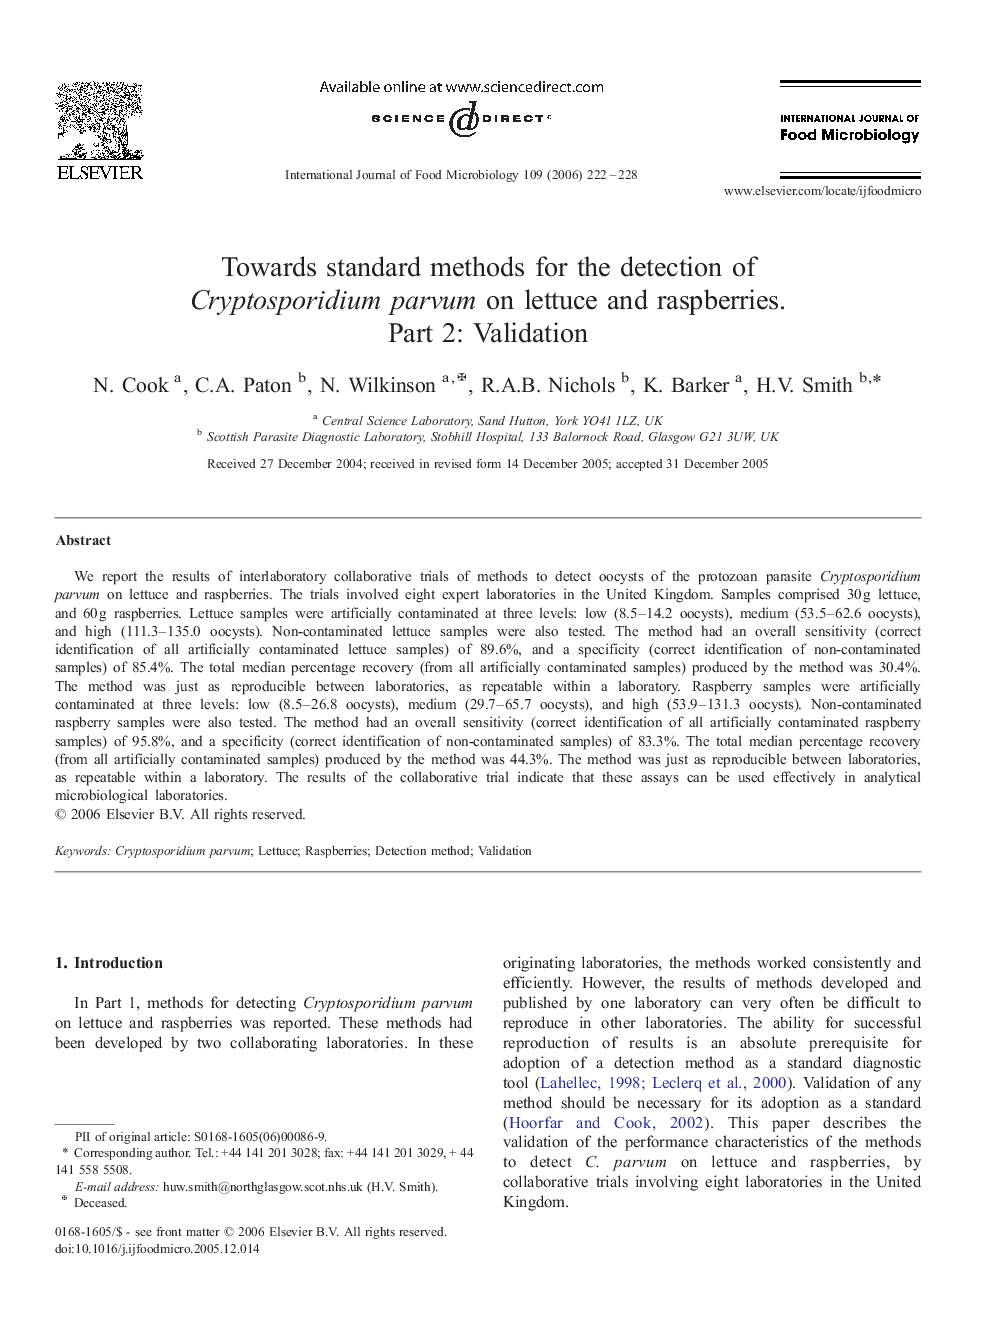 Towards standard methods for the detection of Cryptosporidium parvum on lettuce and raspberries. Part 2: Validation